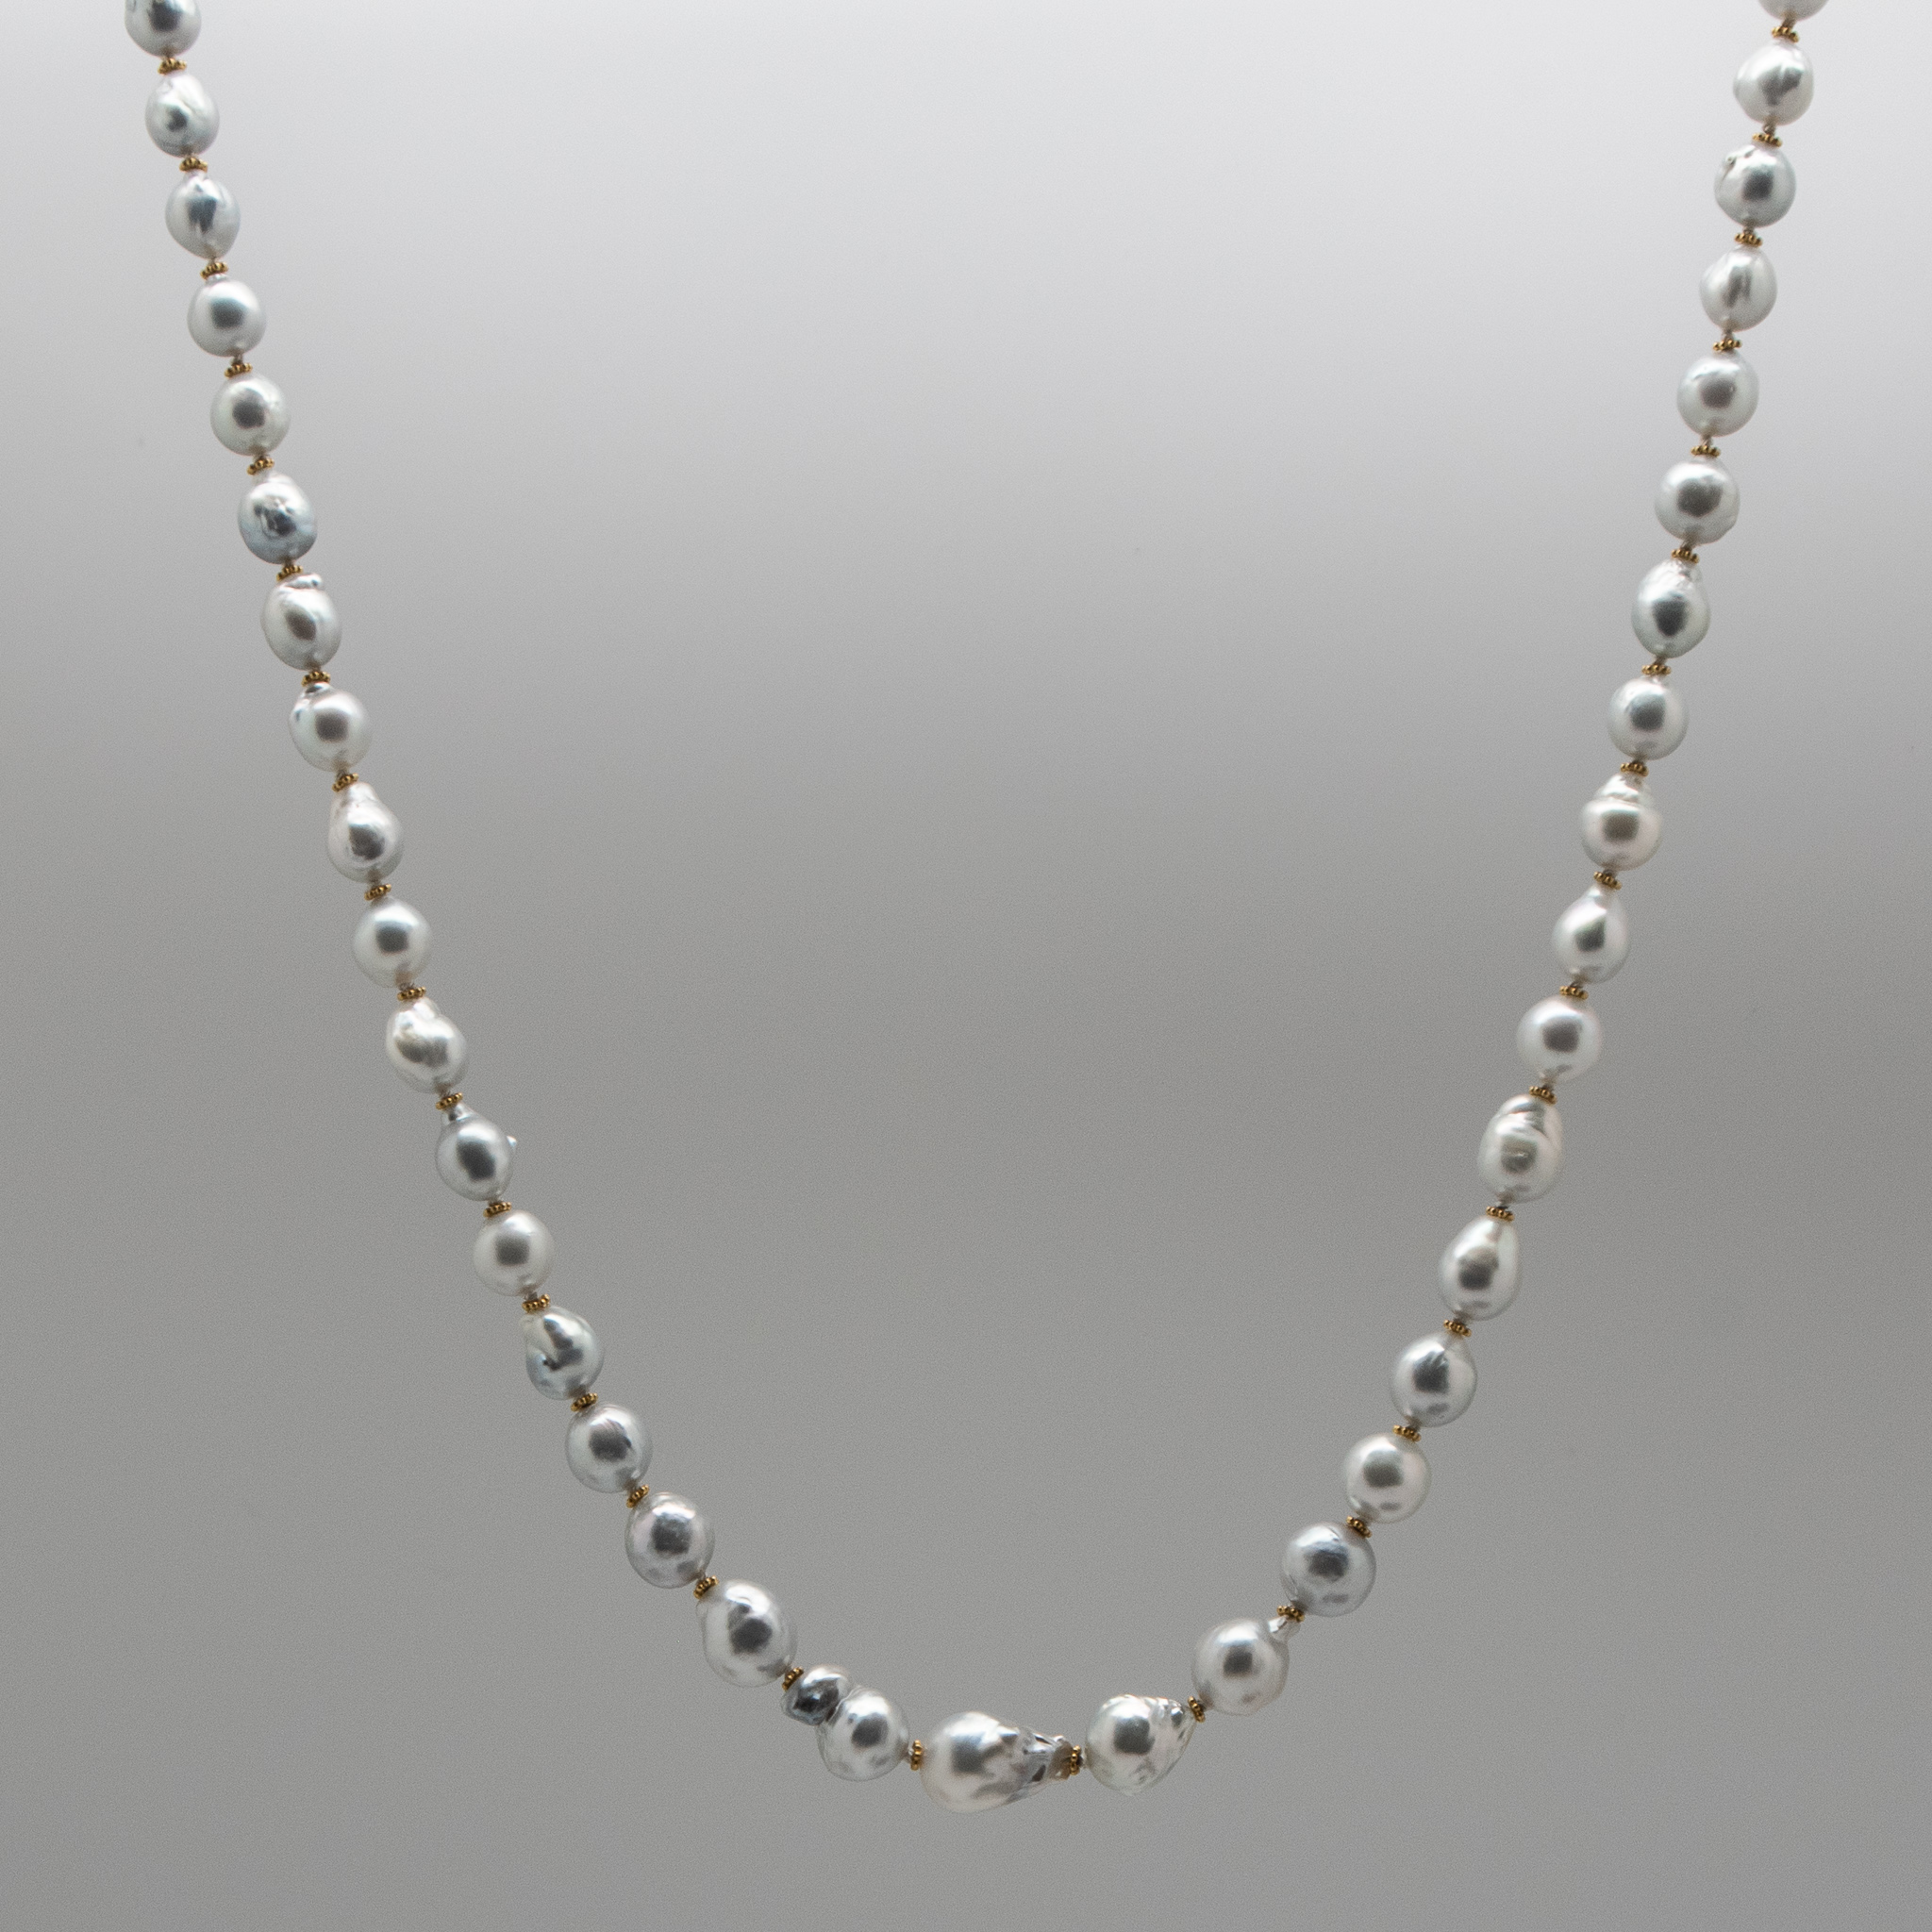 South Seas Idyll • baroque pearl necklace • BENTO extraordinary bling